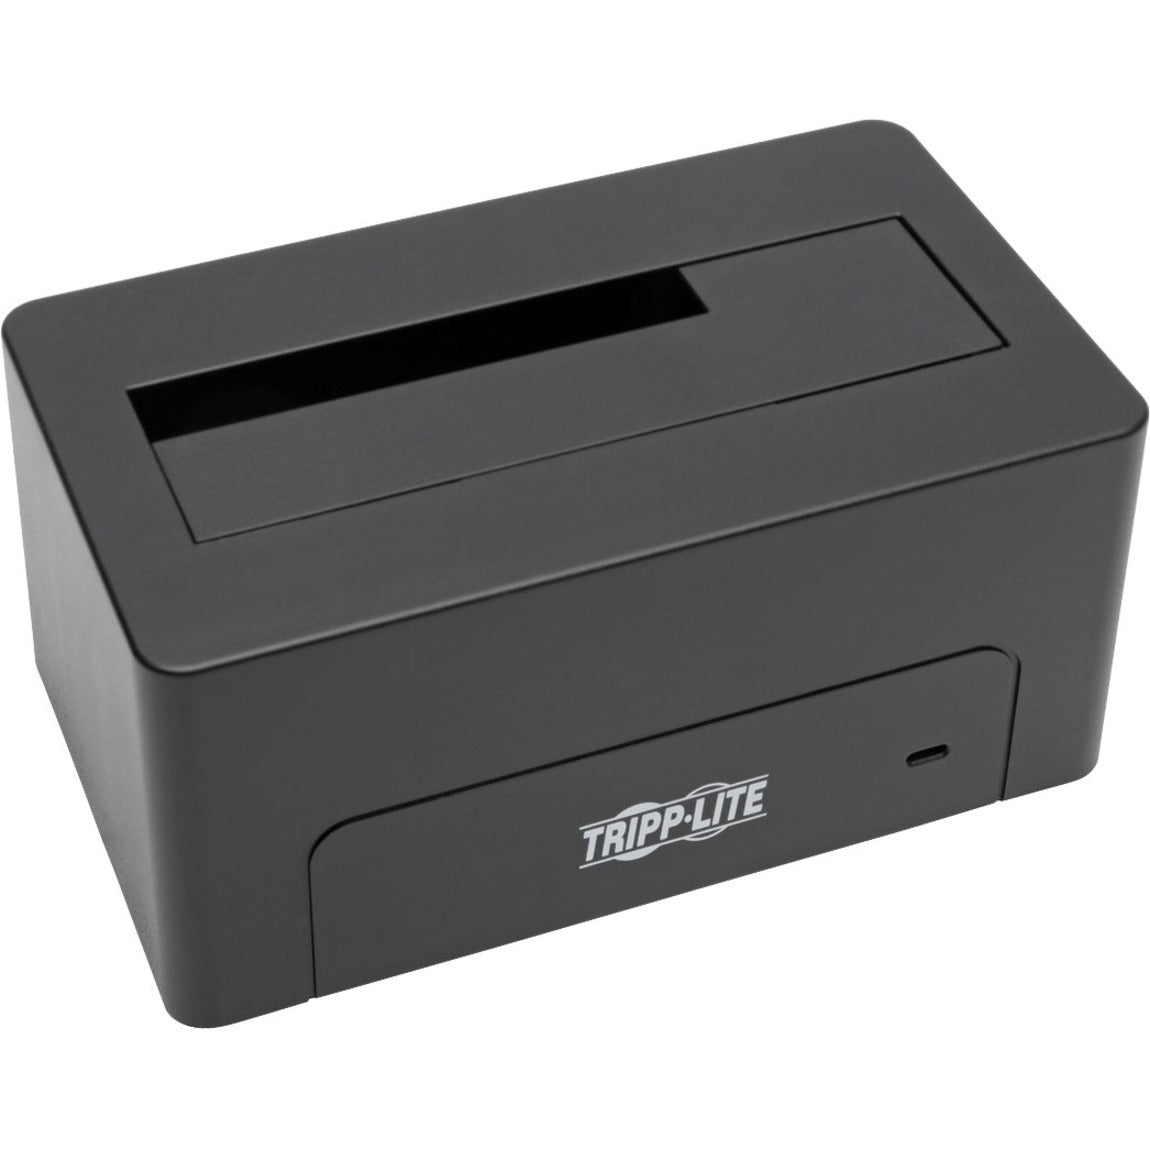 Tripp Lite U339-000 Quick Dock USB3.0 to SATA Hard Drive Quick Dock, External Drive Cabinet